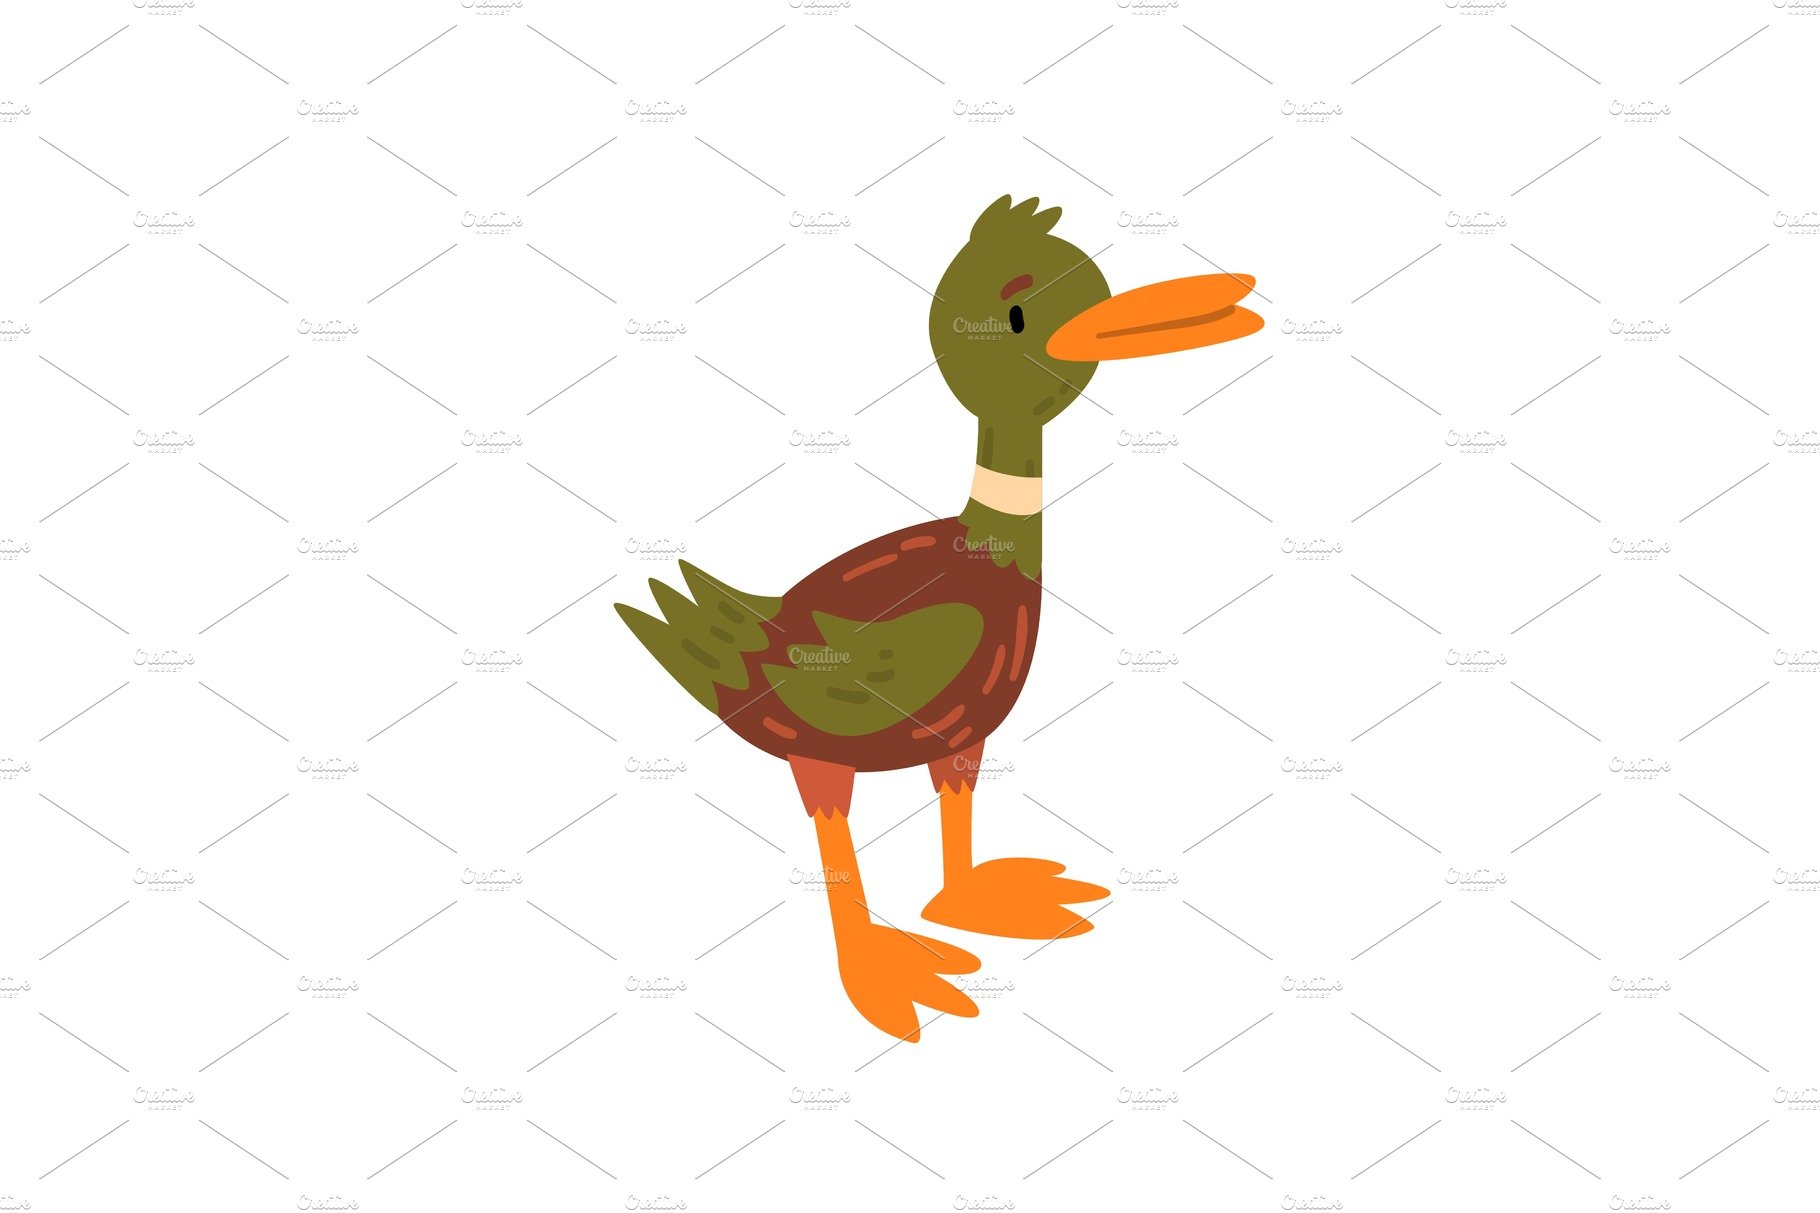 Cute Male Mallard Duckling Cartoon cover image.